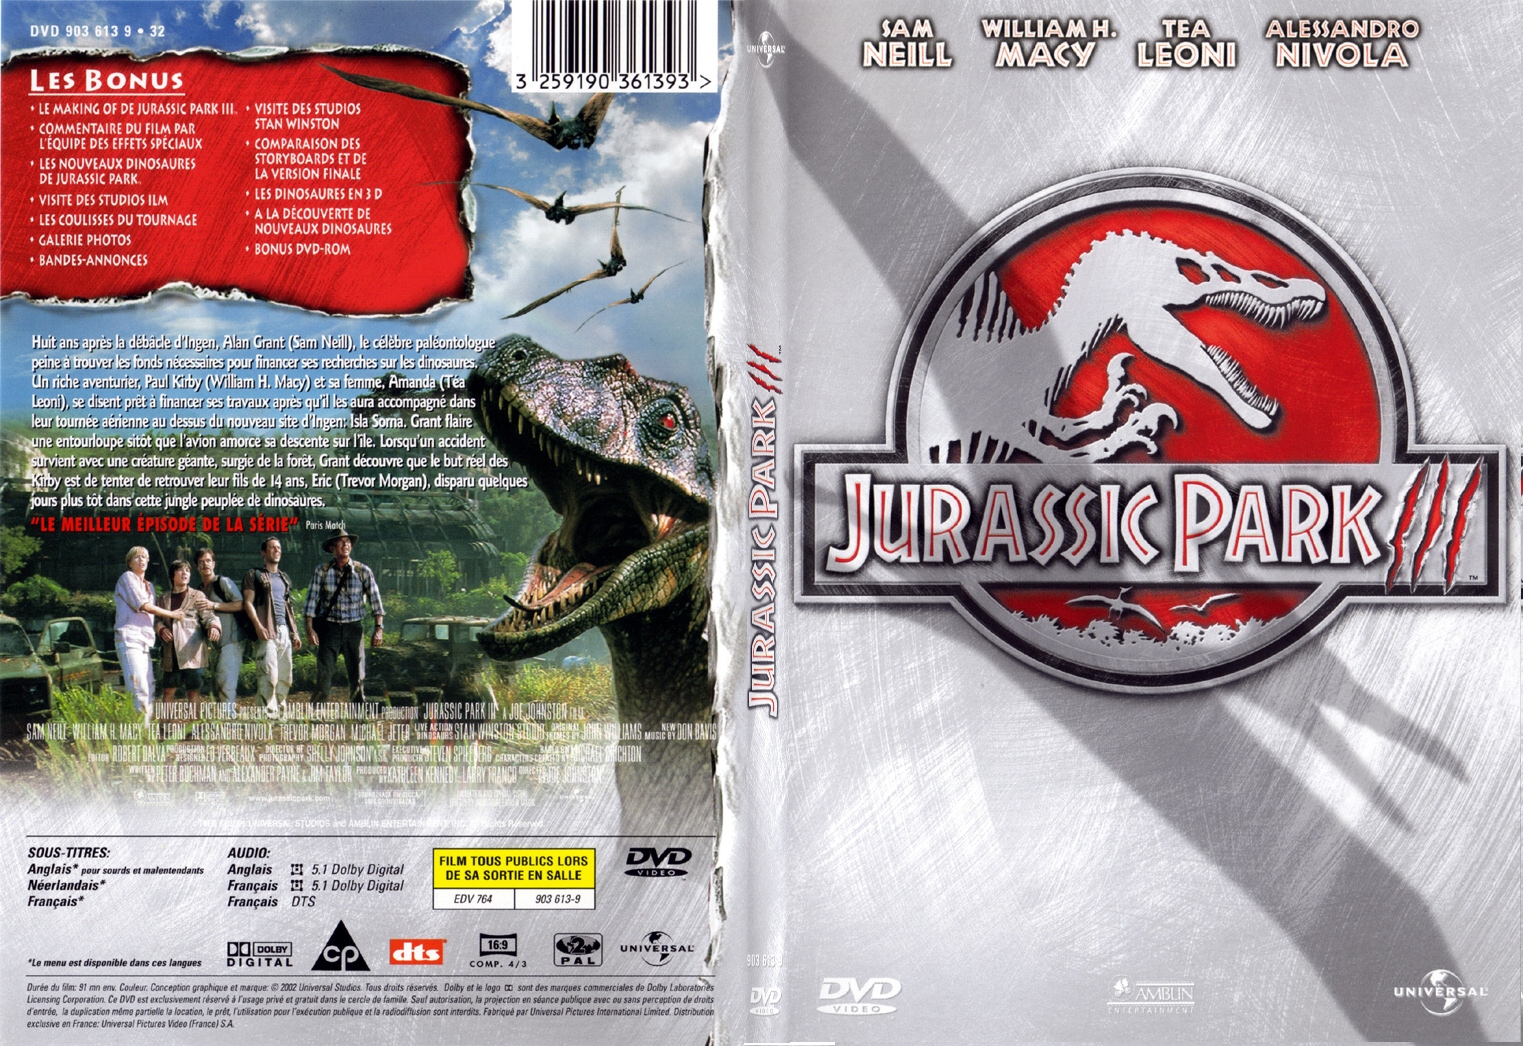 Jaquette DVD Jurassic park 3 - SLIM